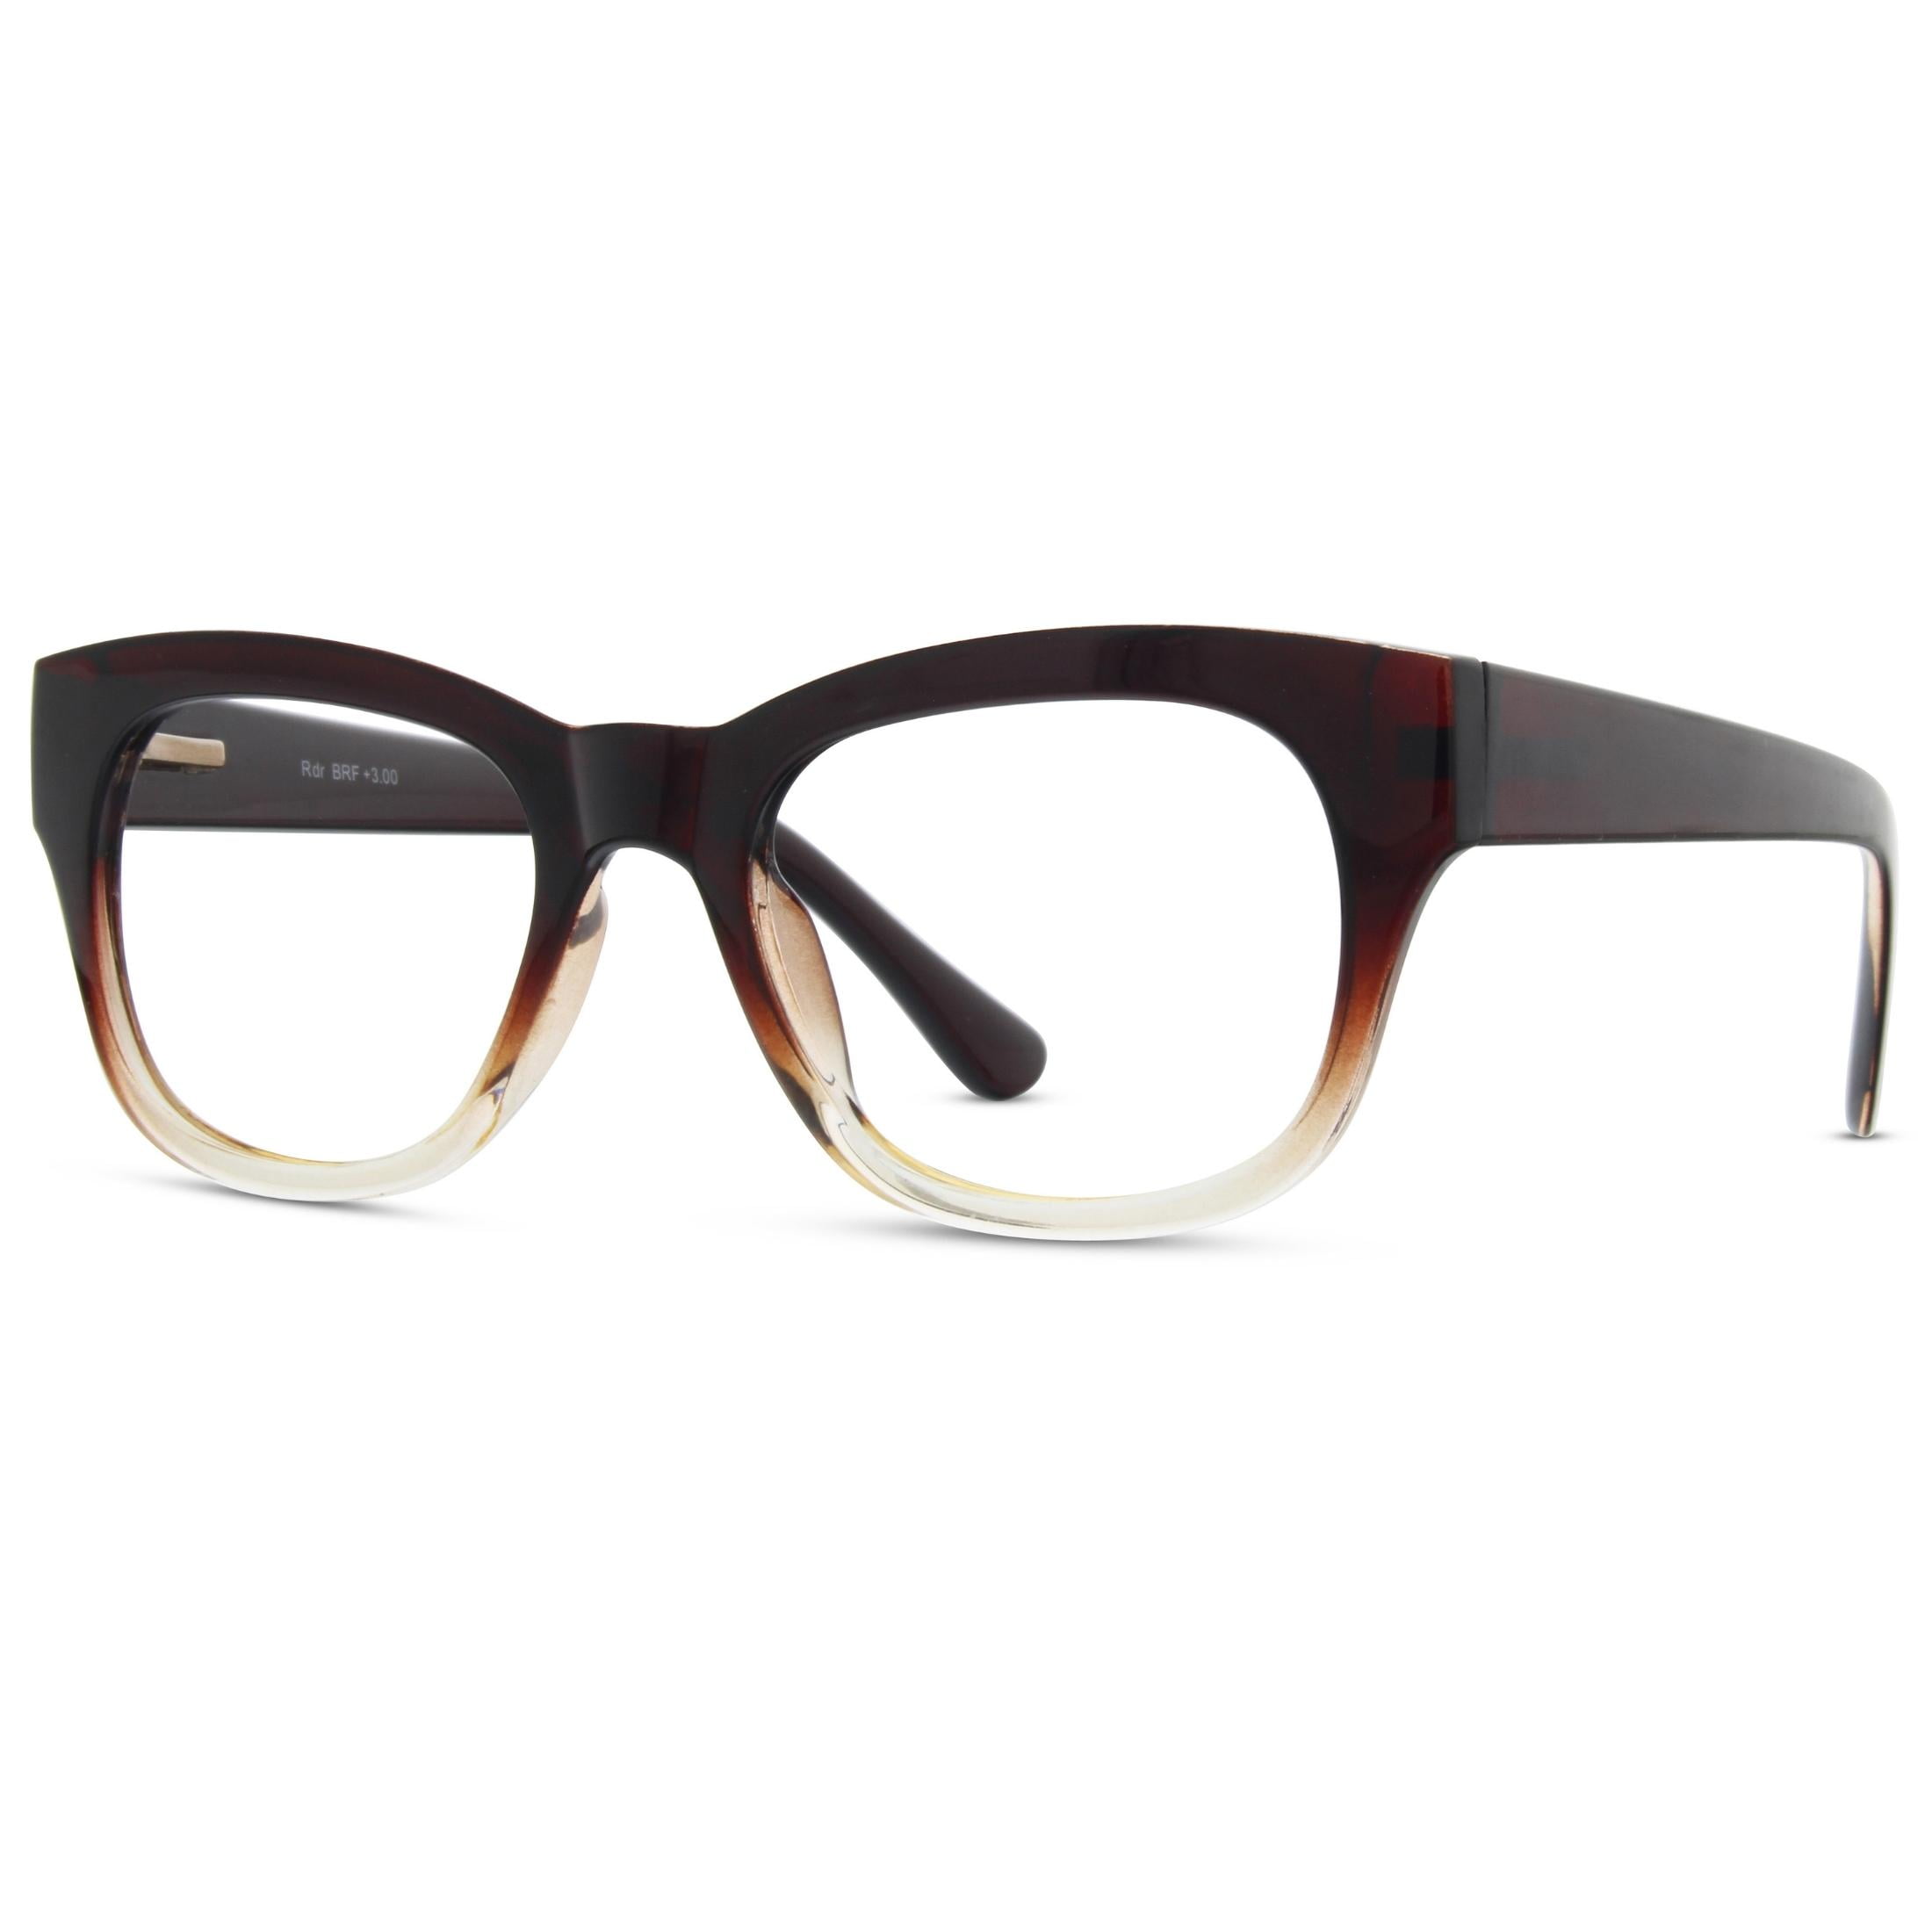 Jonas Paul Eyewear Blue Light Glasses, Brown / Crystal Fade, Magnifying Acrylic Lens, Unisex, 2.50